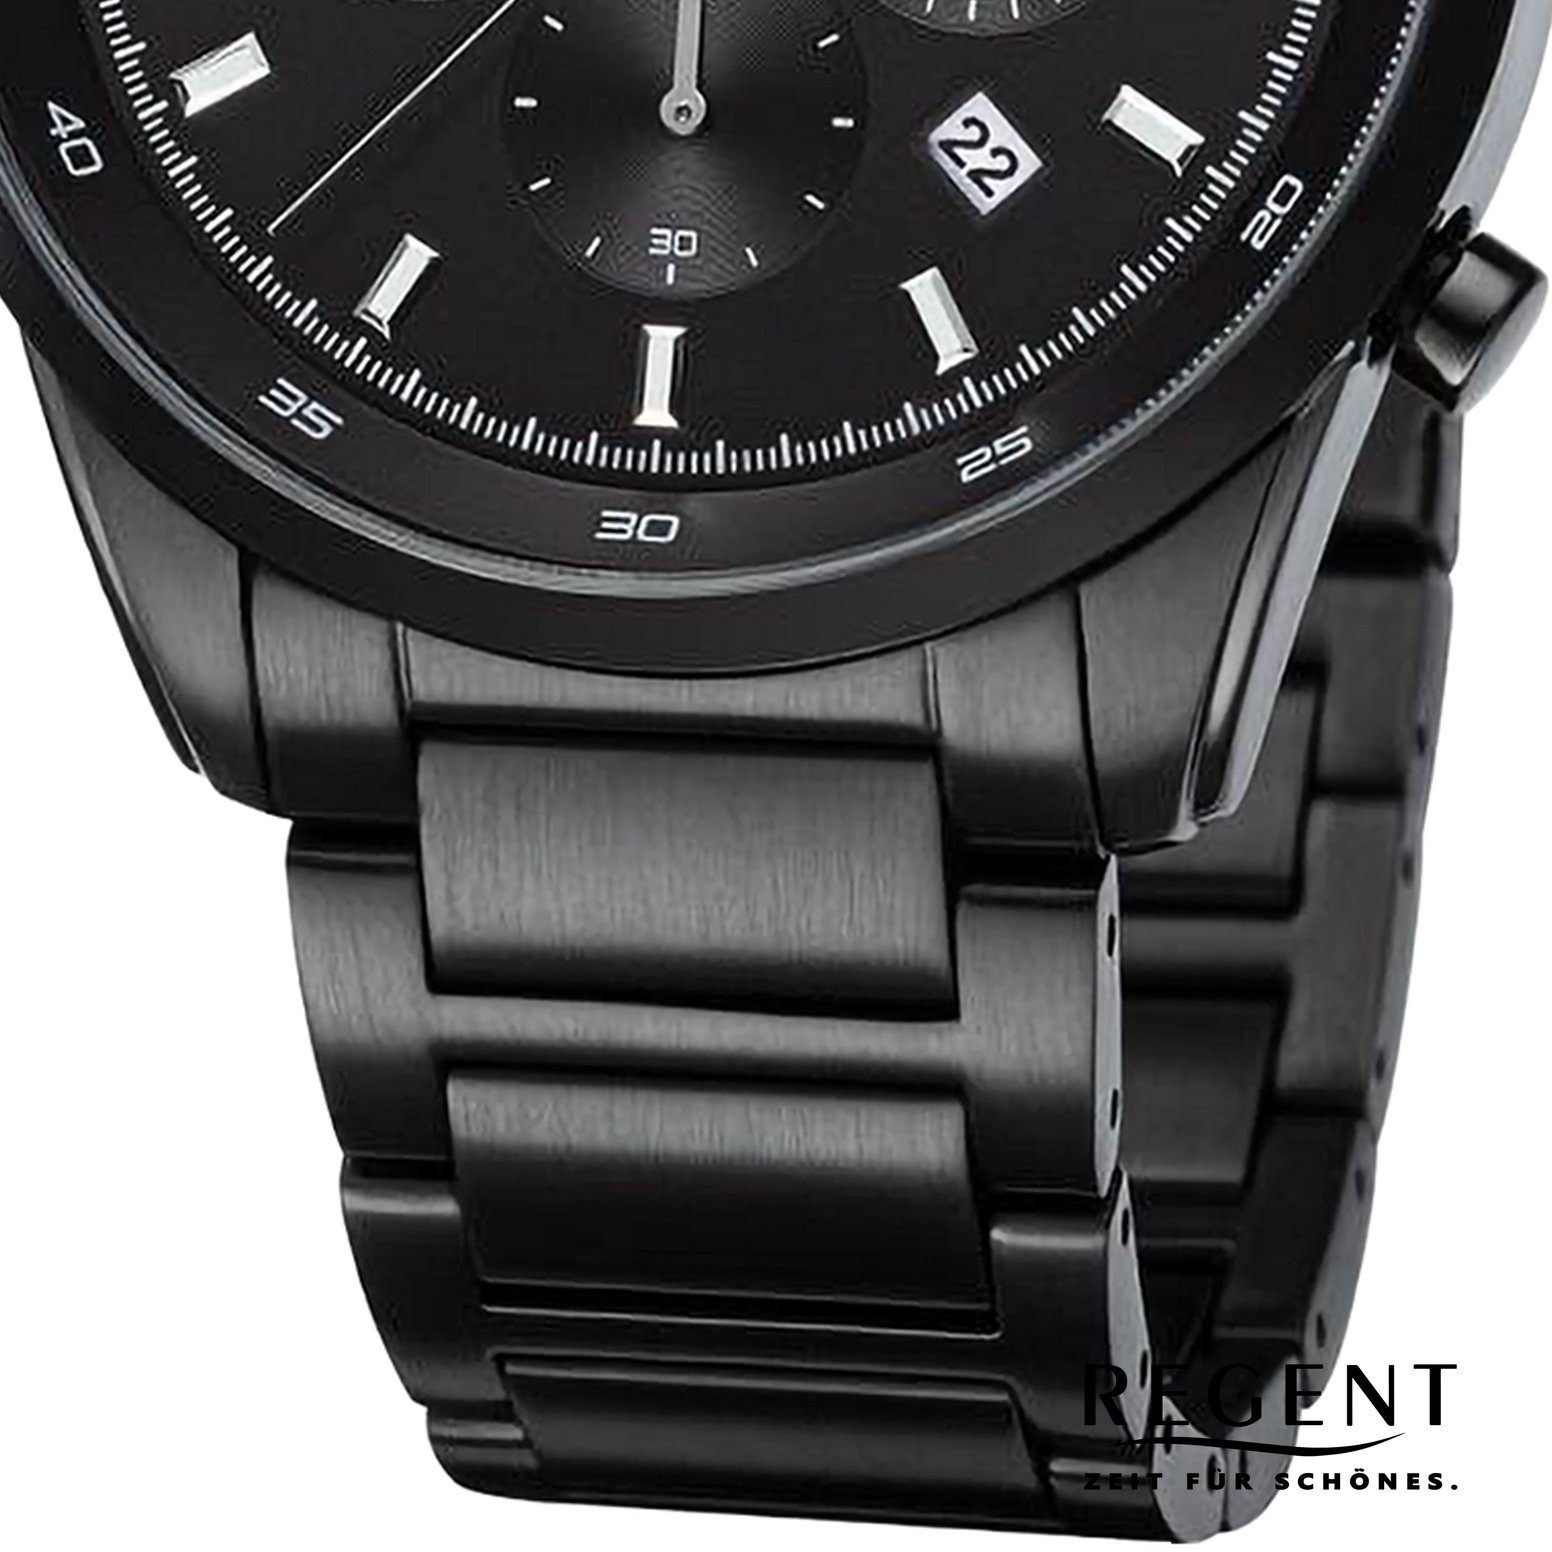 Regent Analog, rund, Armbanduhr Armbanduhr (ca. groß Herren Quarzuhr Regent extra Herren 44mm), Metallarmband